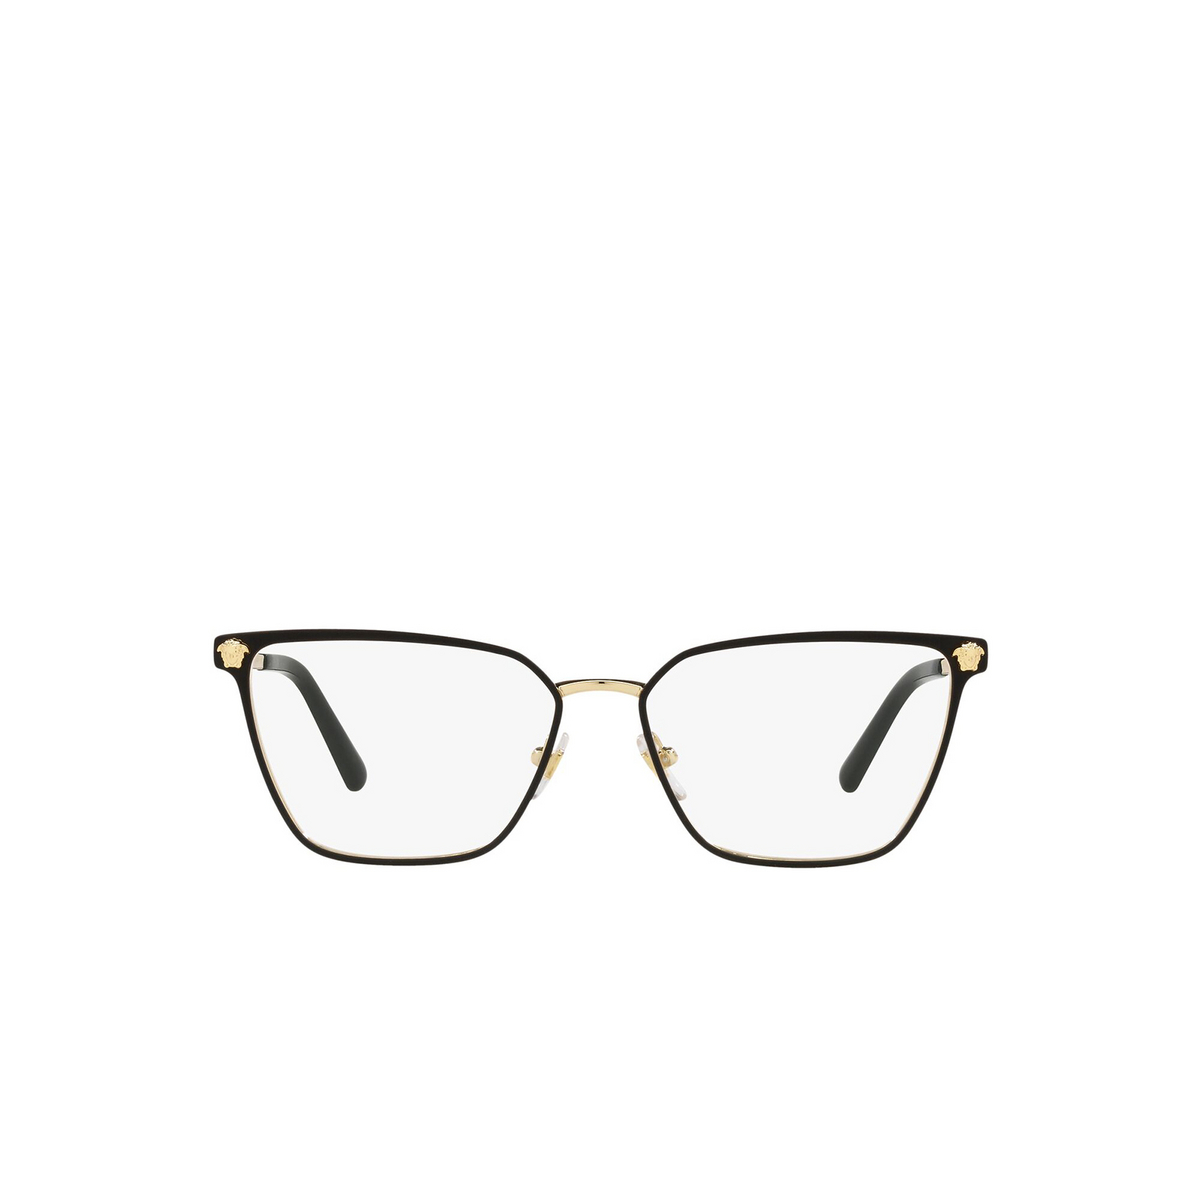 Versace® Square Eyeglasses: VE1275 color Matte Black / Gold 1433 - front view.